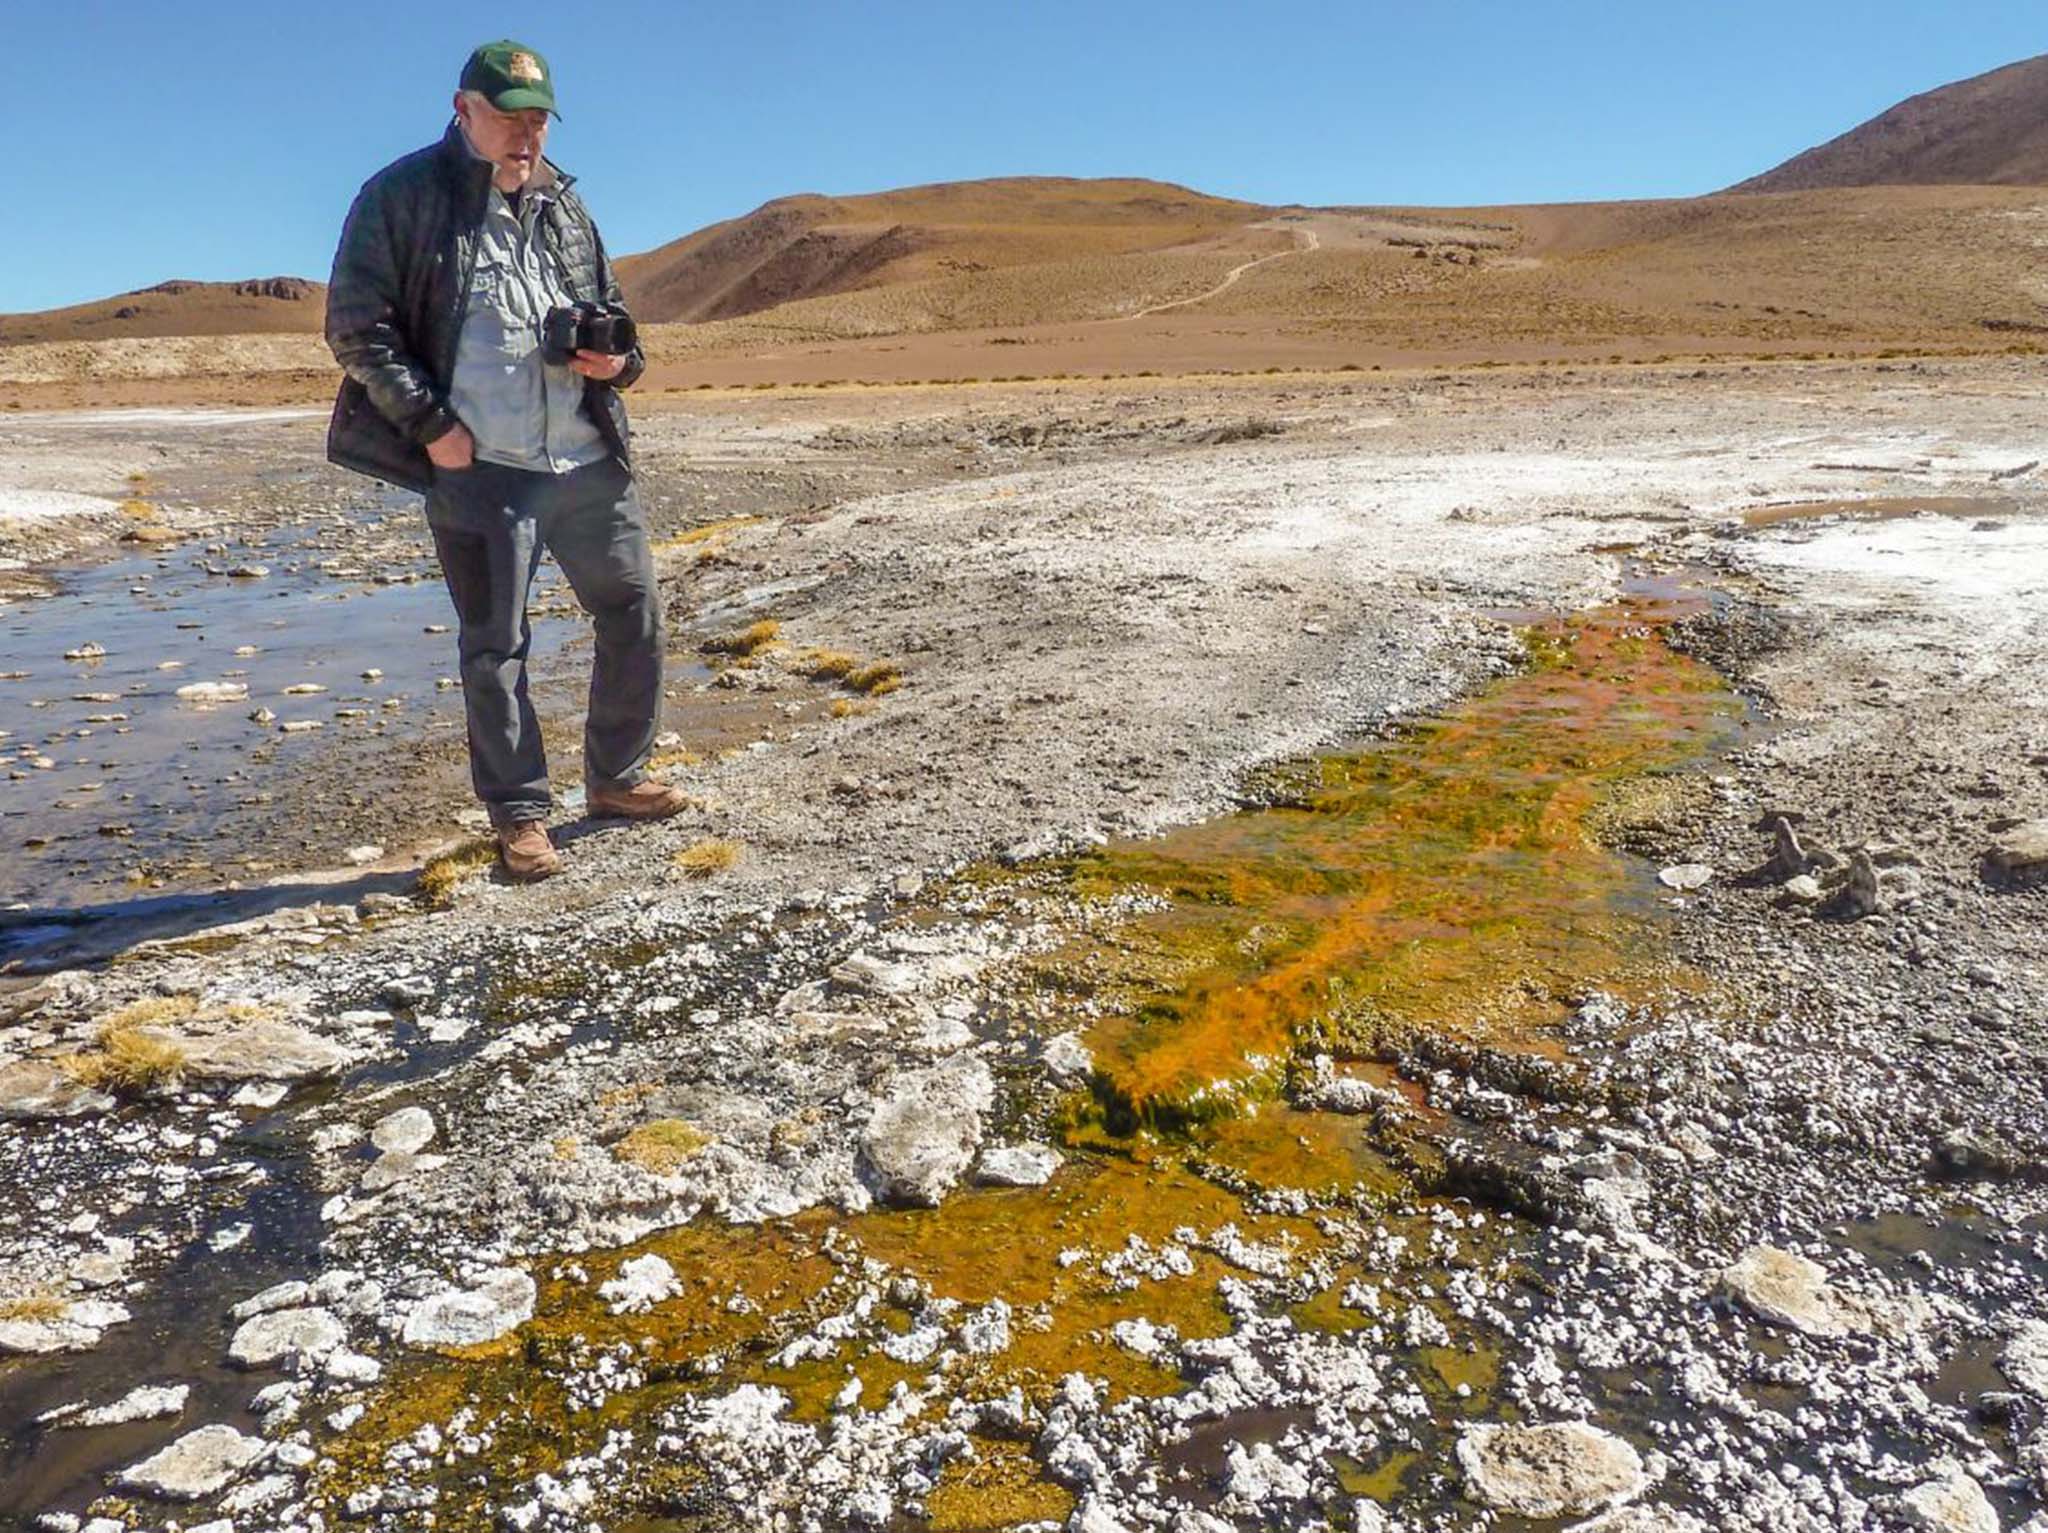 Geoscientist Jack Farmer studying silica deposits at El Tatio hot springs in Chile